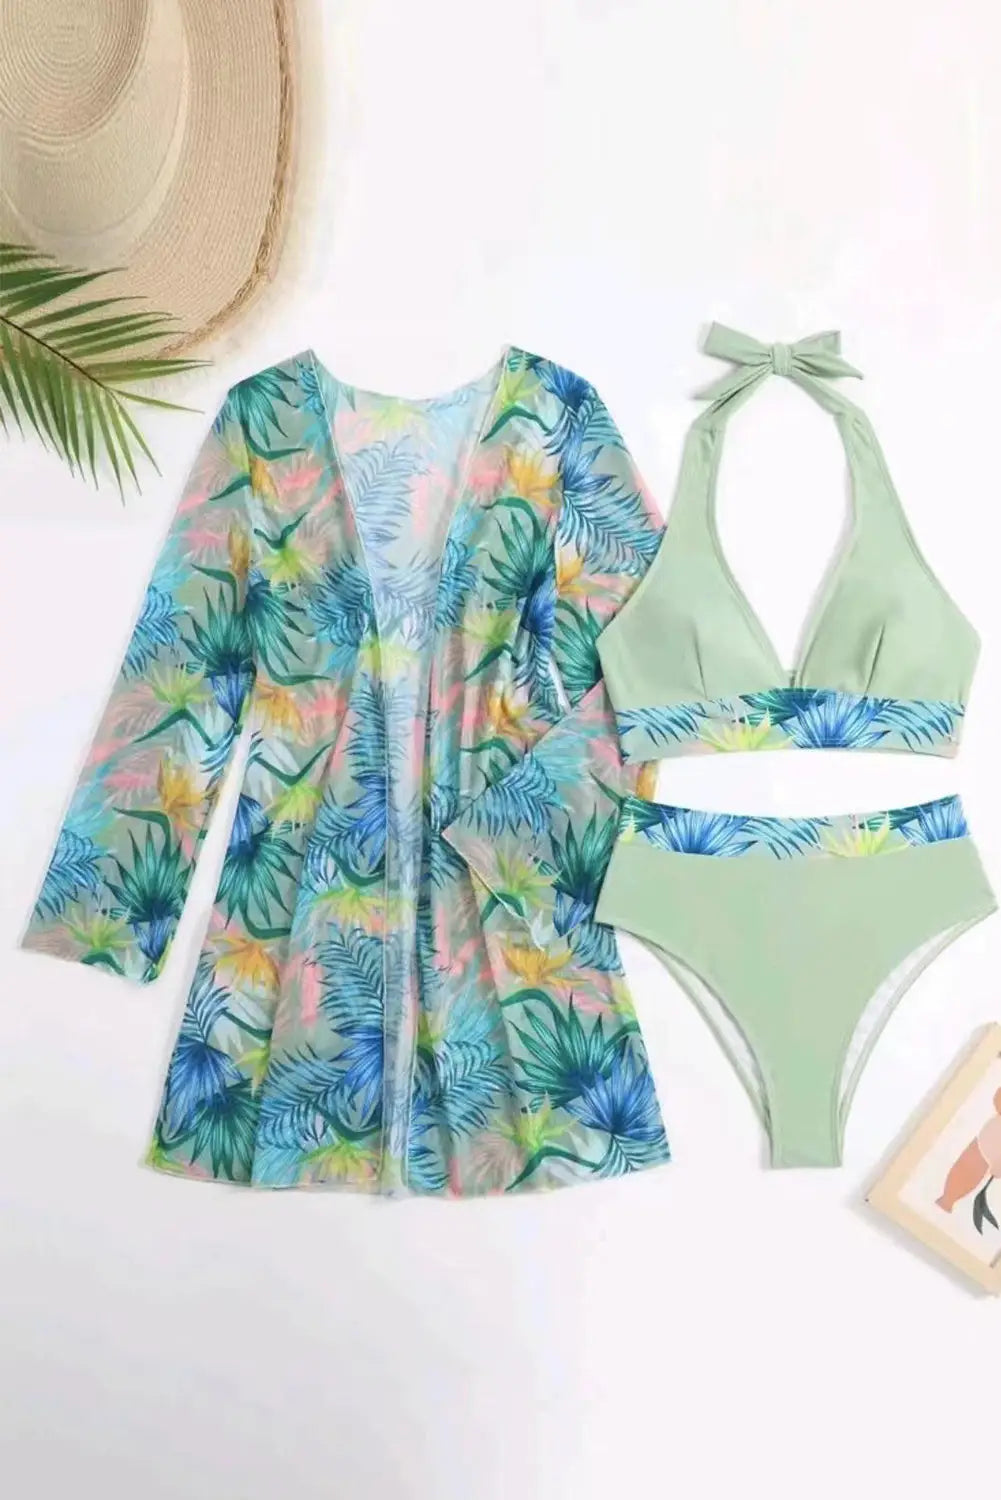 Tropical 3 pcs bikini set with cover up - bikinis